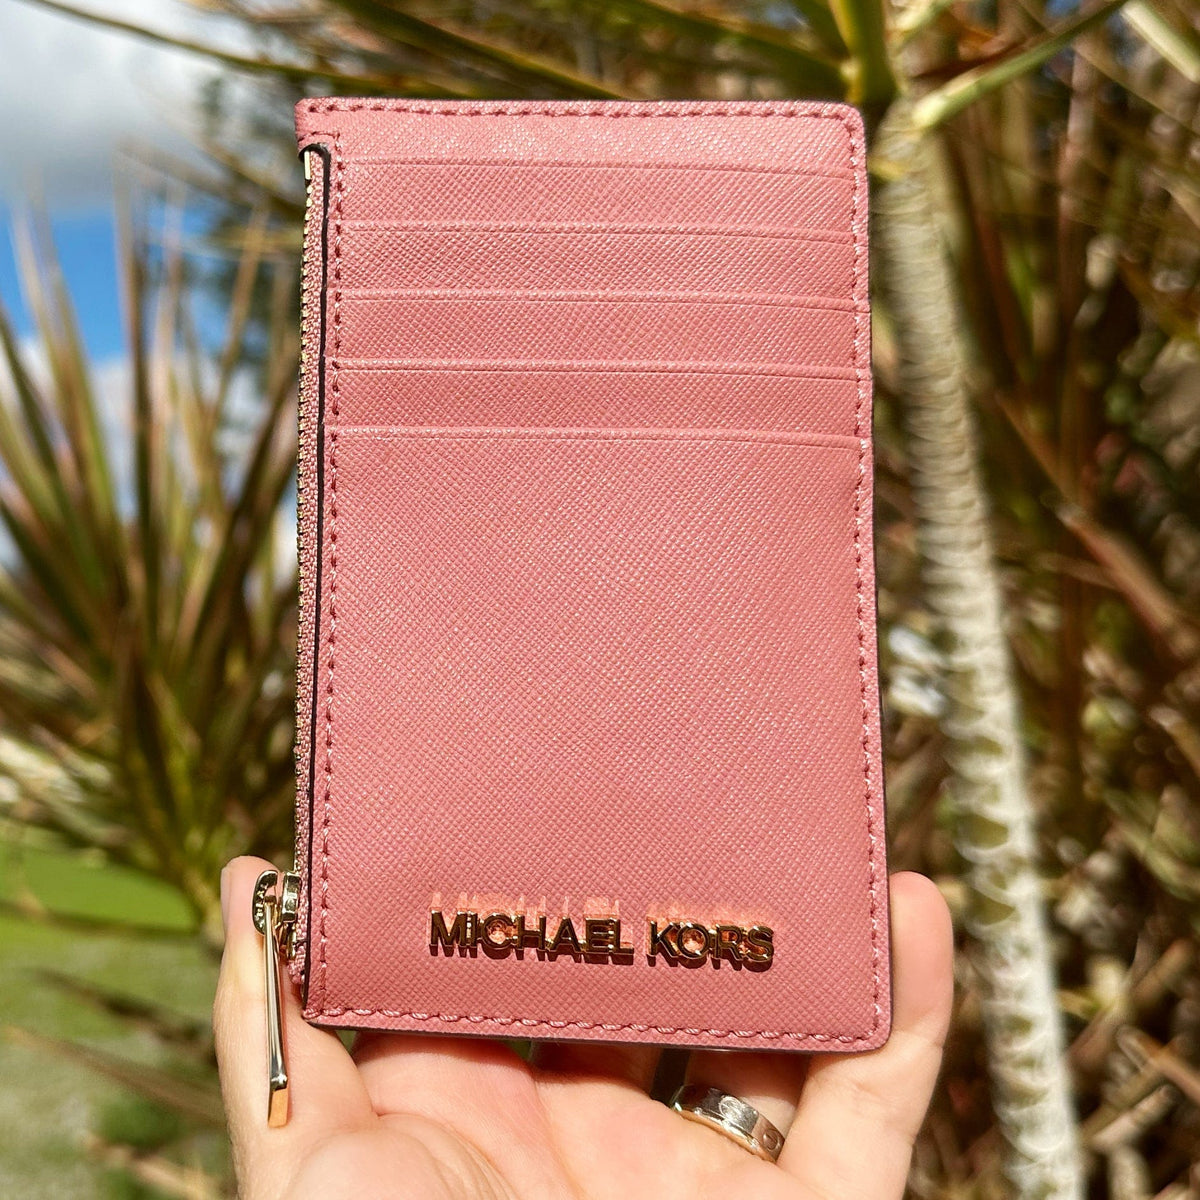 Wallets & purses Michael Kors - Jet Set medium blue snap wallet